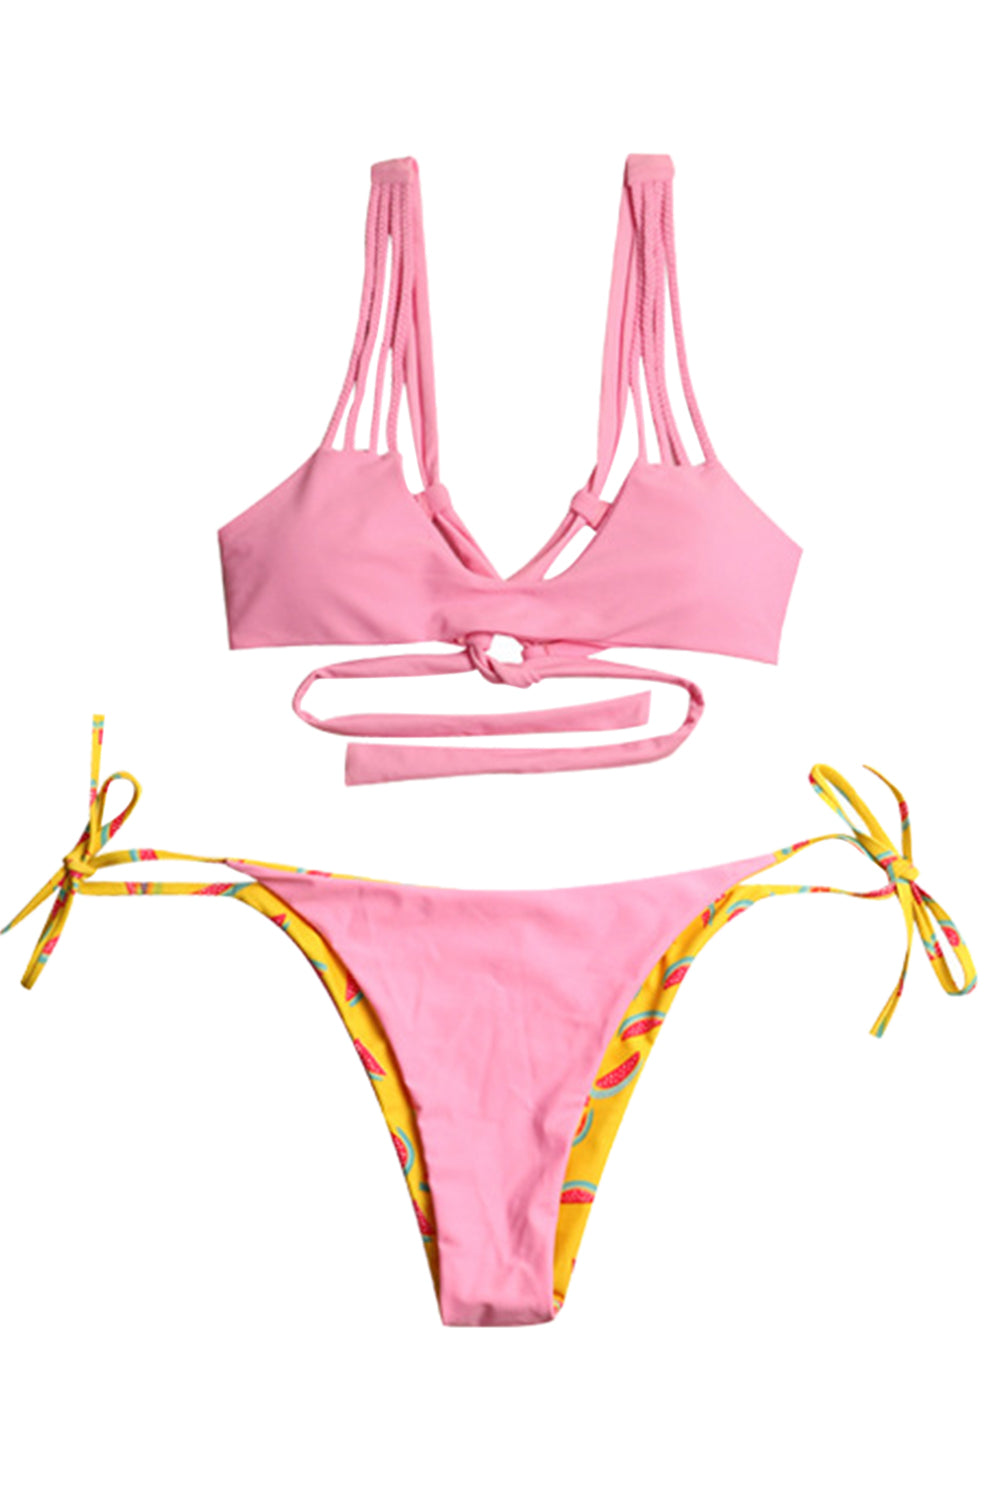 Iyasson Cute Watermelon Printing Bikini Swimwear With Strappy Detailing